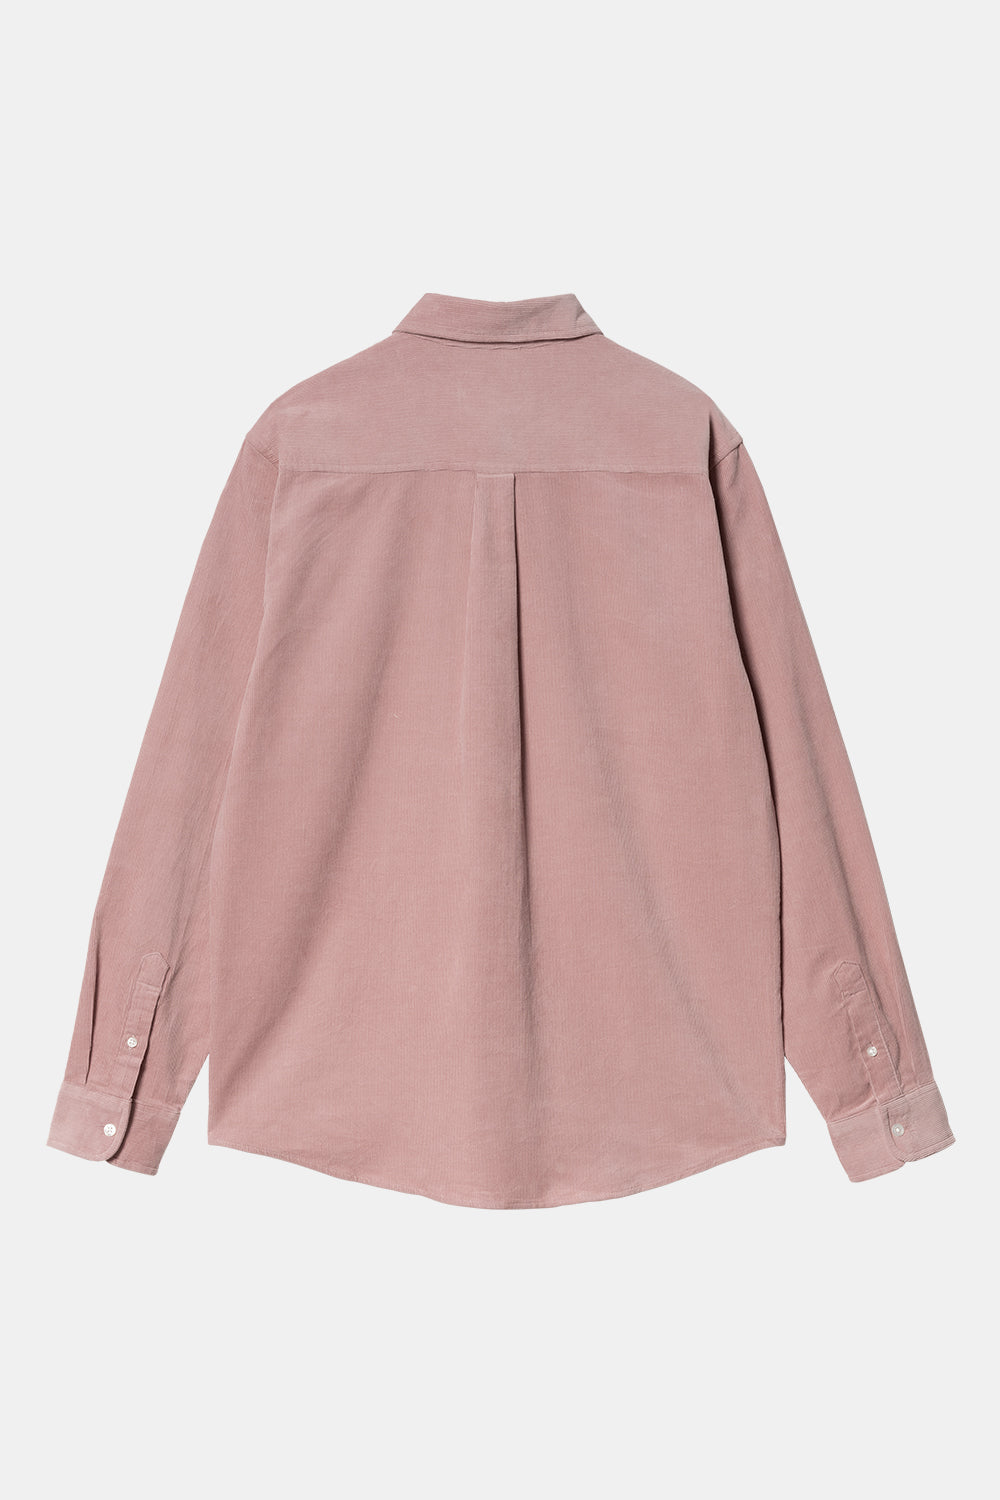 Carhartt WIP Madison Cord Long Sleeve Shirt (Glassy Pink/Wax)